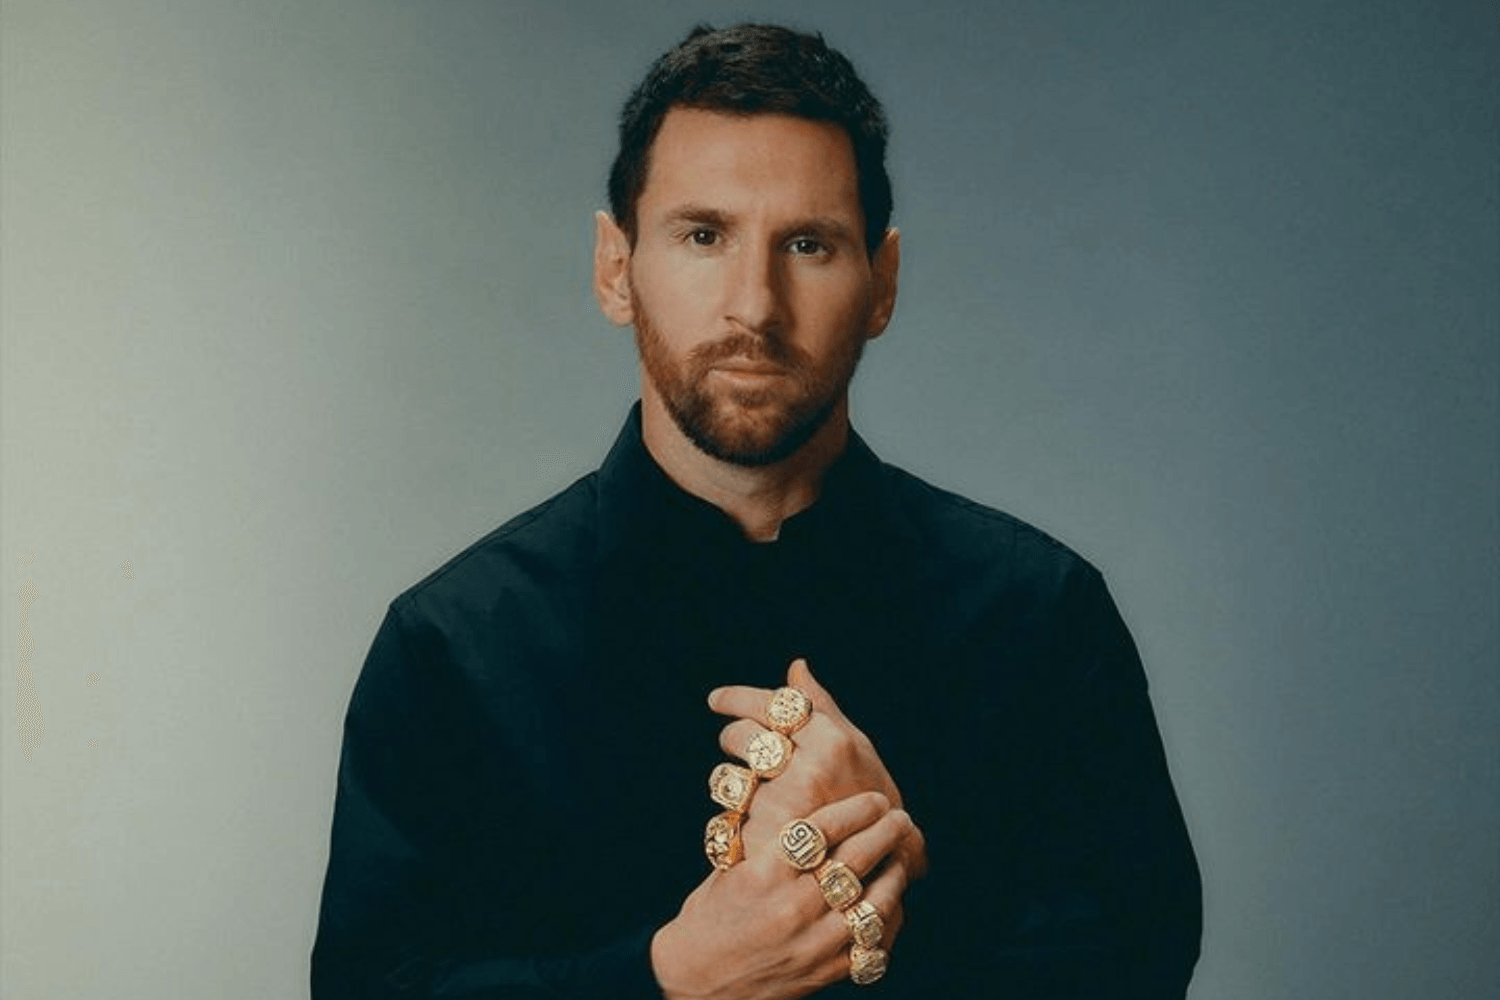 Vier Messi's recordbrekende 8e Ballon d'Or met de Lionel Messi Collectie